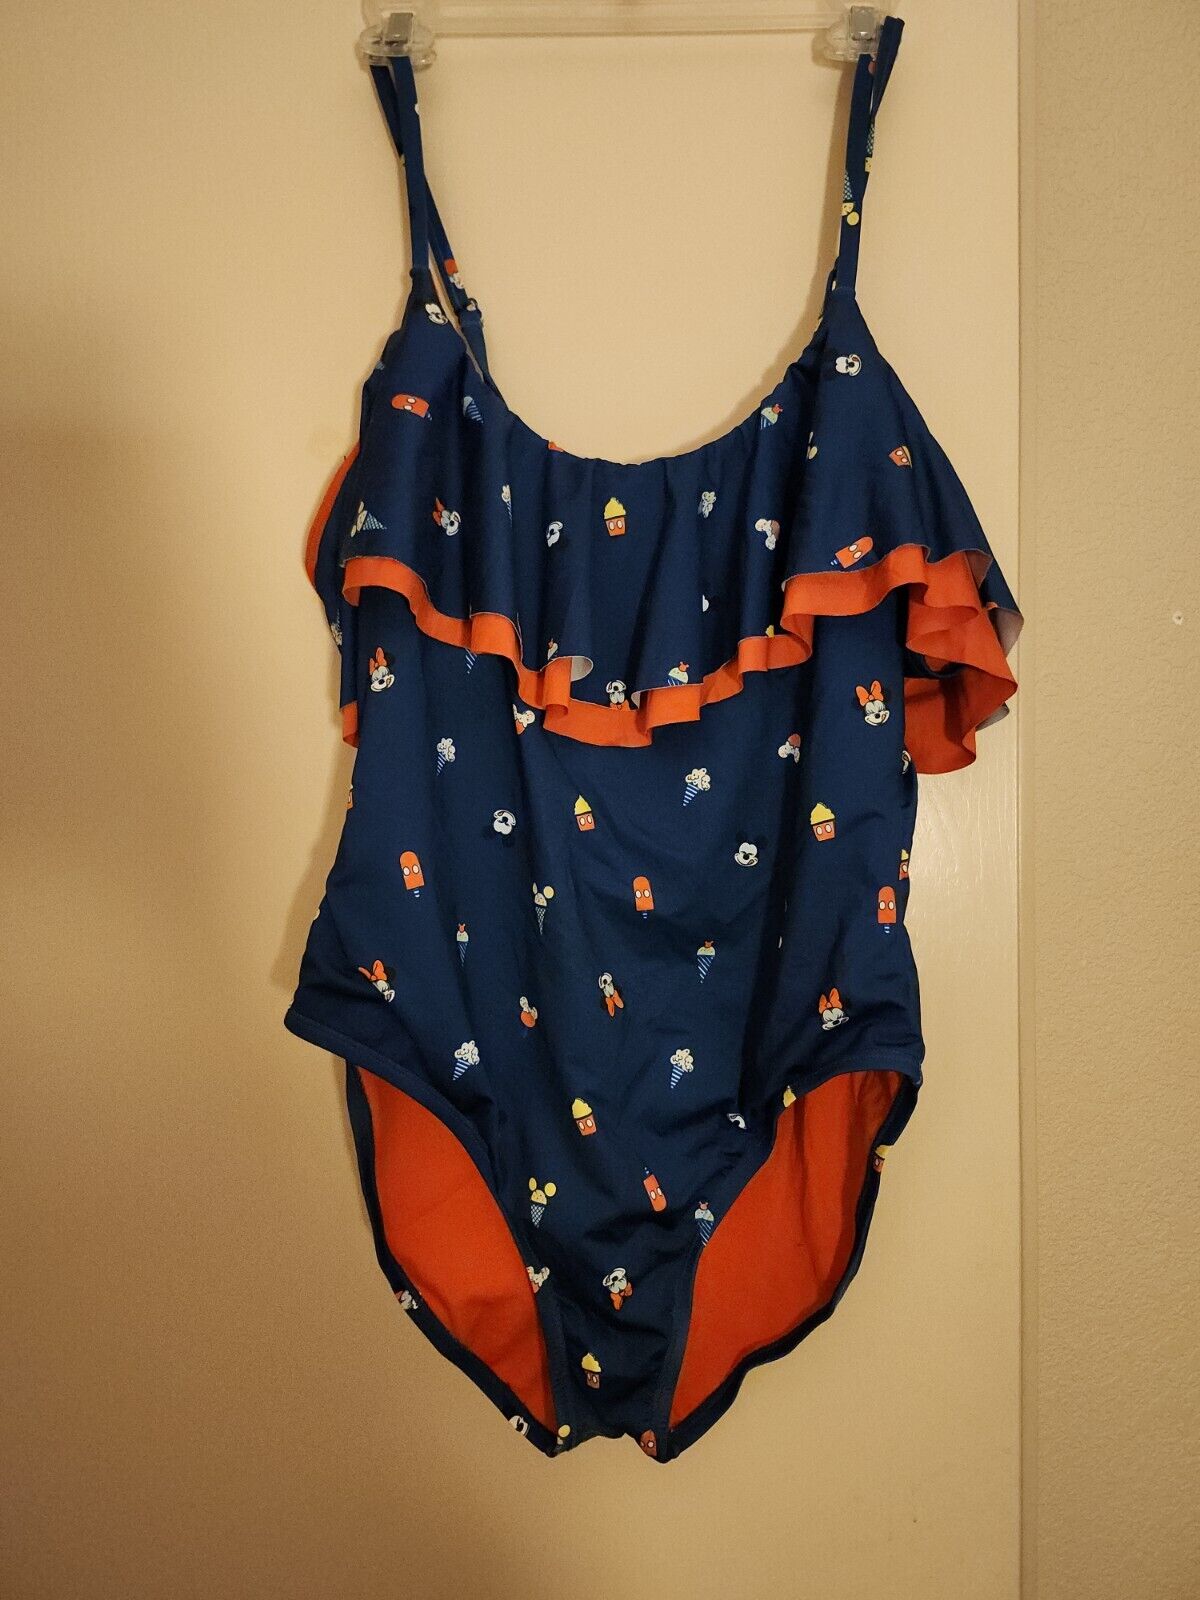  Disney Store Minnie Mouse Swim Suit Adult Plus Size 2XL  XXL Navy 1 Piece